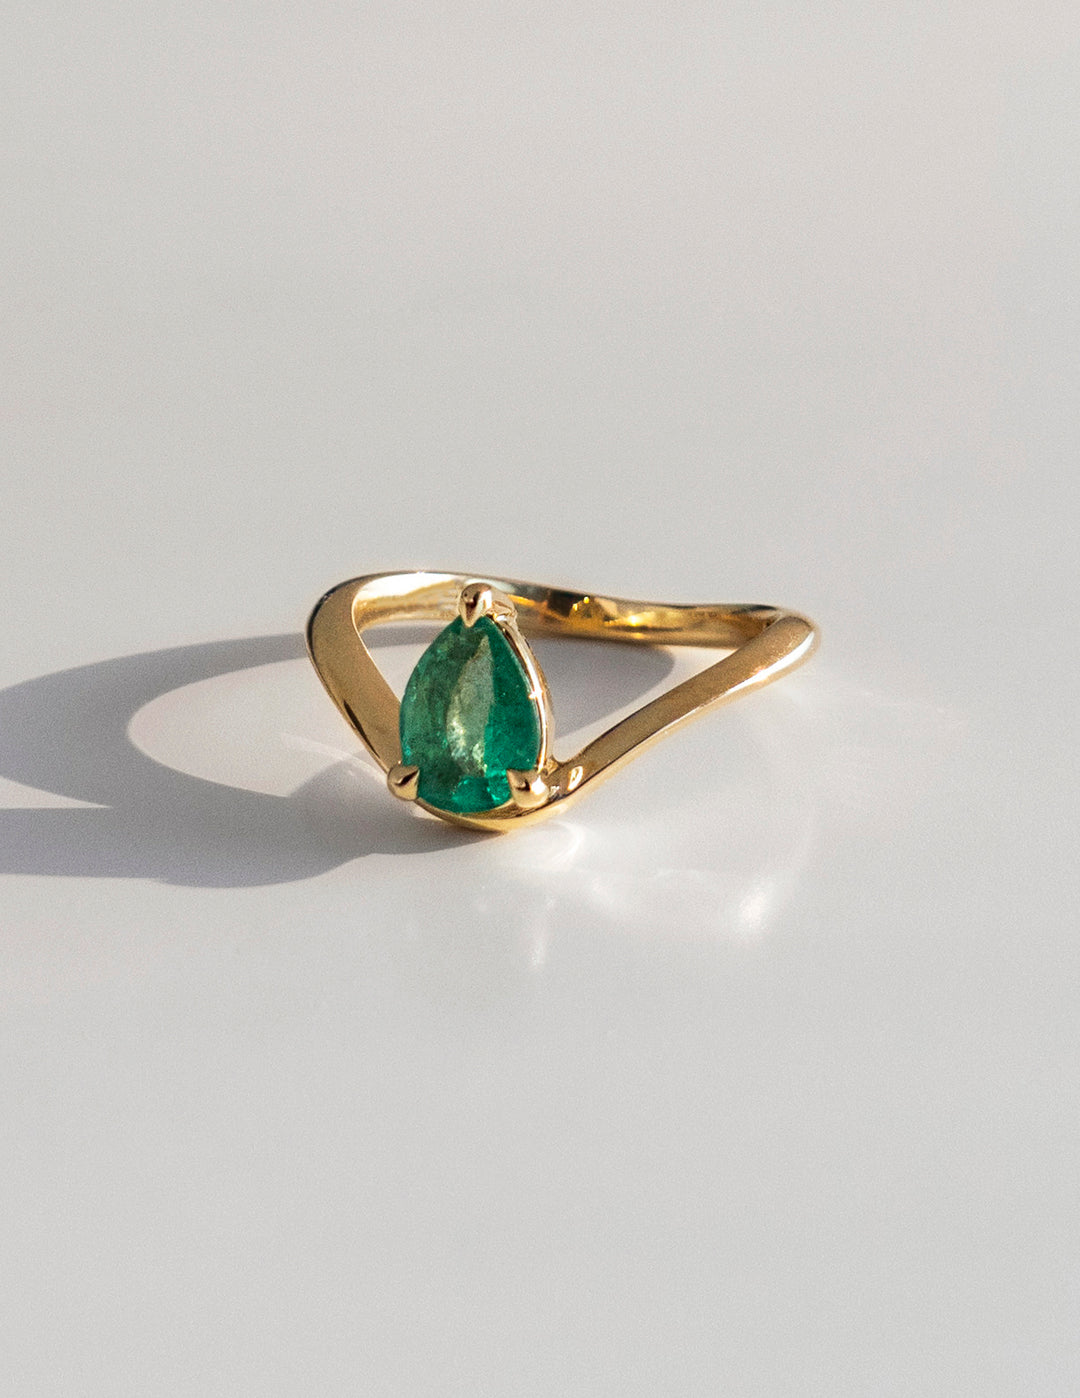 Cadette Pear emerald Sunrise engagement ring. Pear emerald nature inspired engagement ring. Pear emerald sunrise inspired engagement ring.